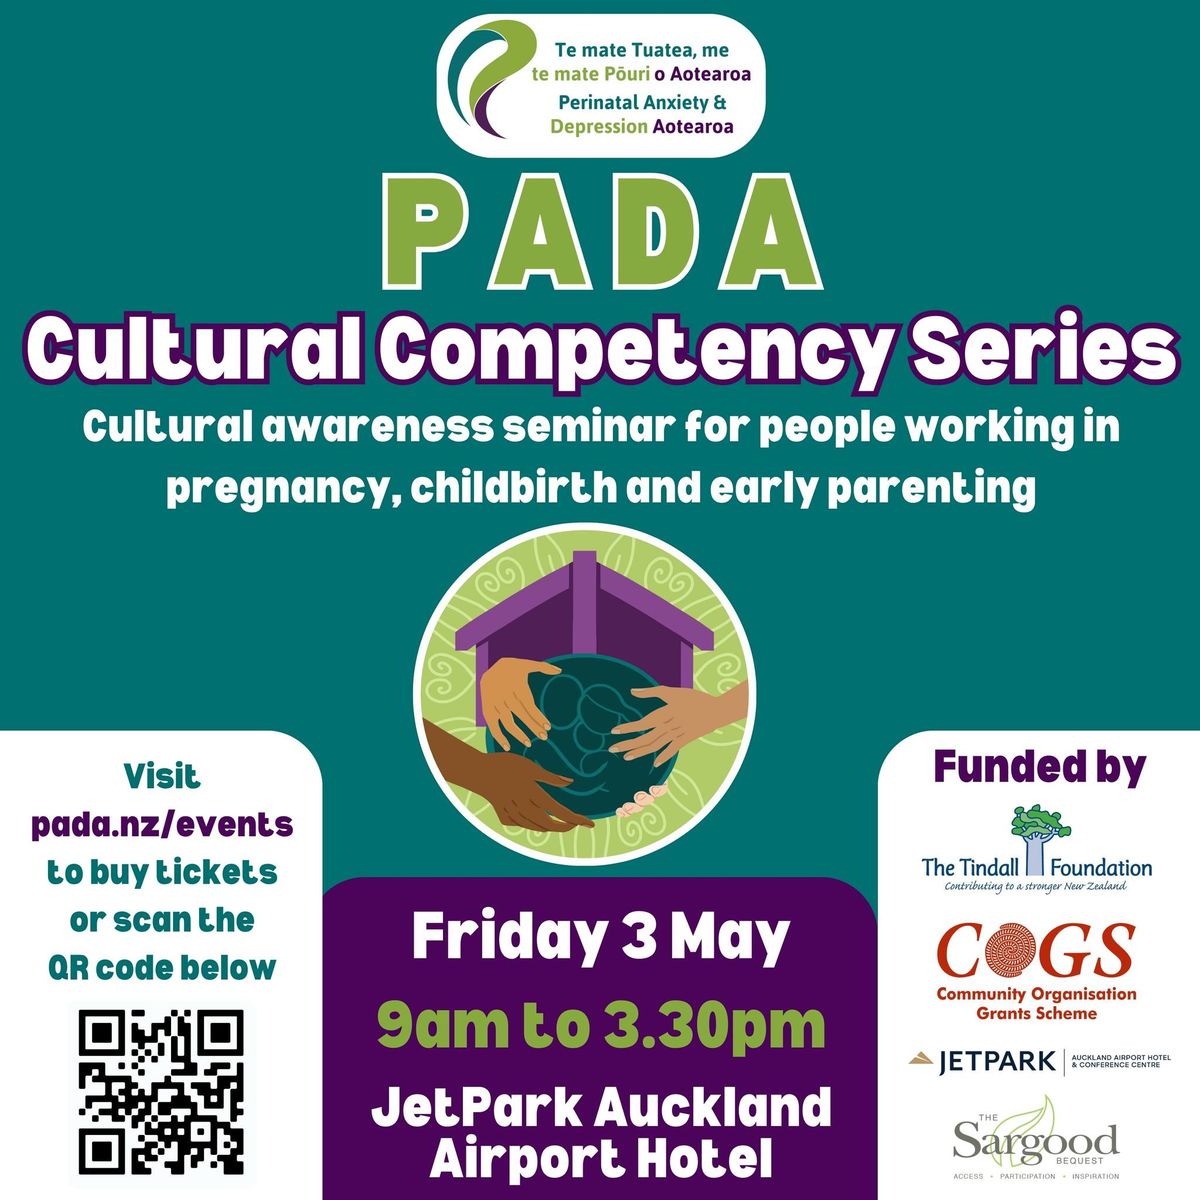 PADA Cultural Competency Series